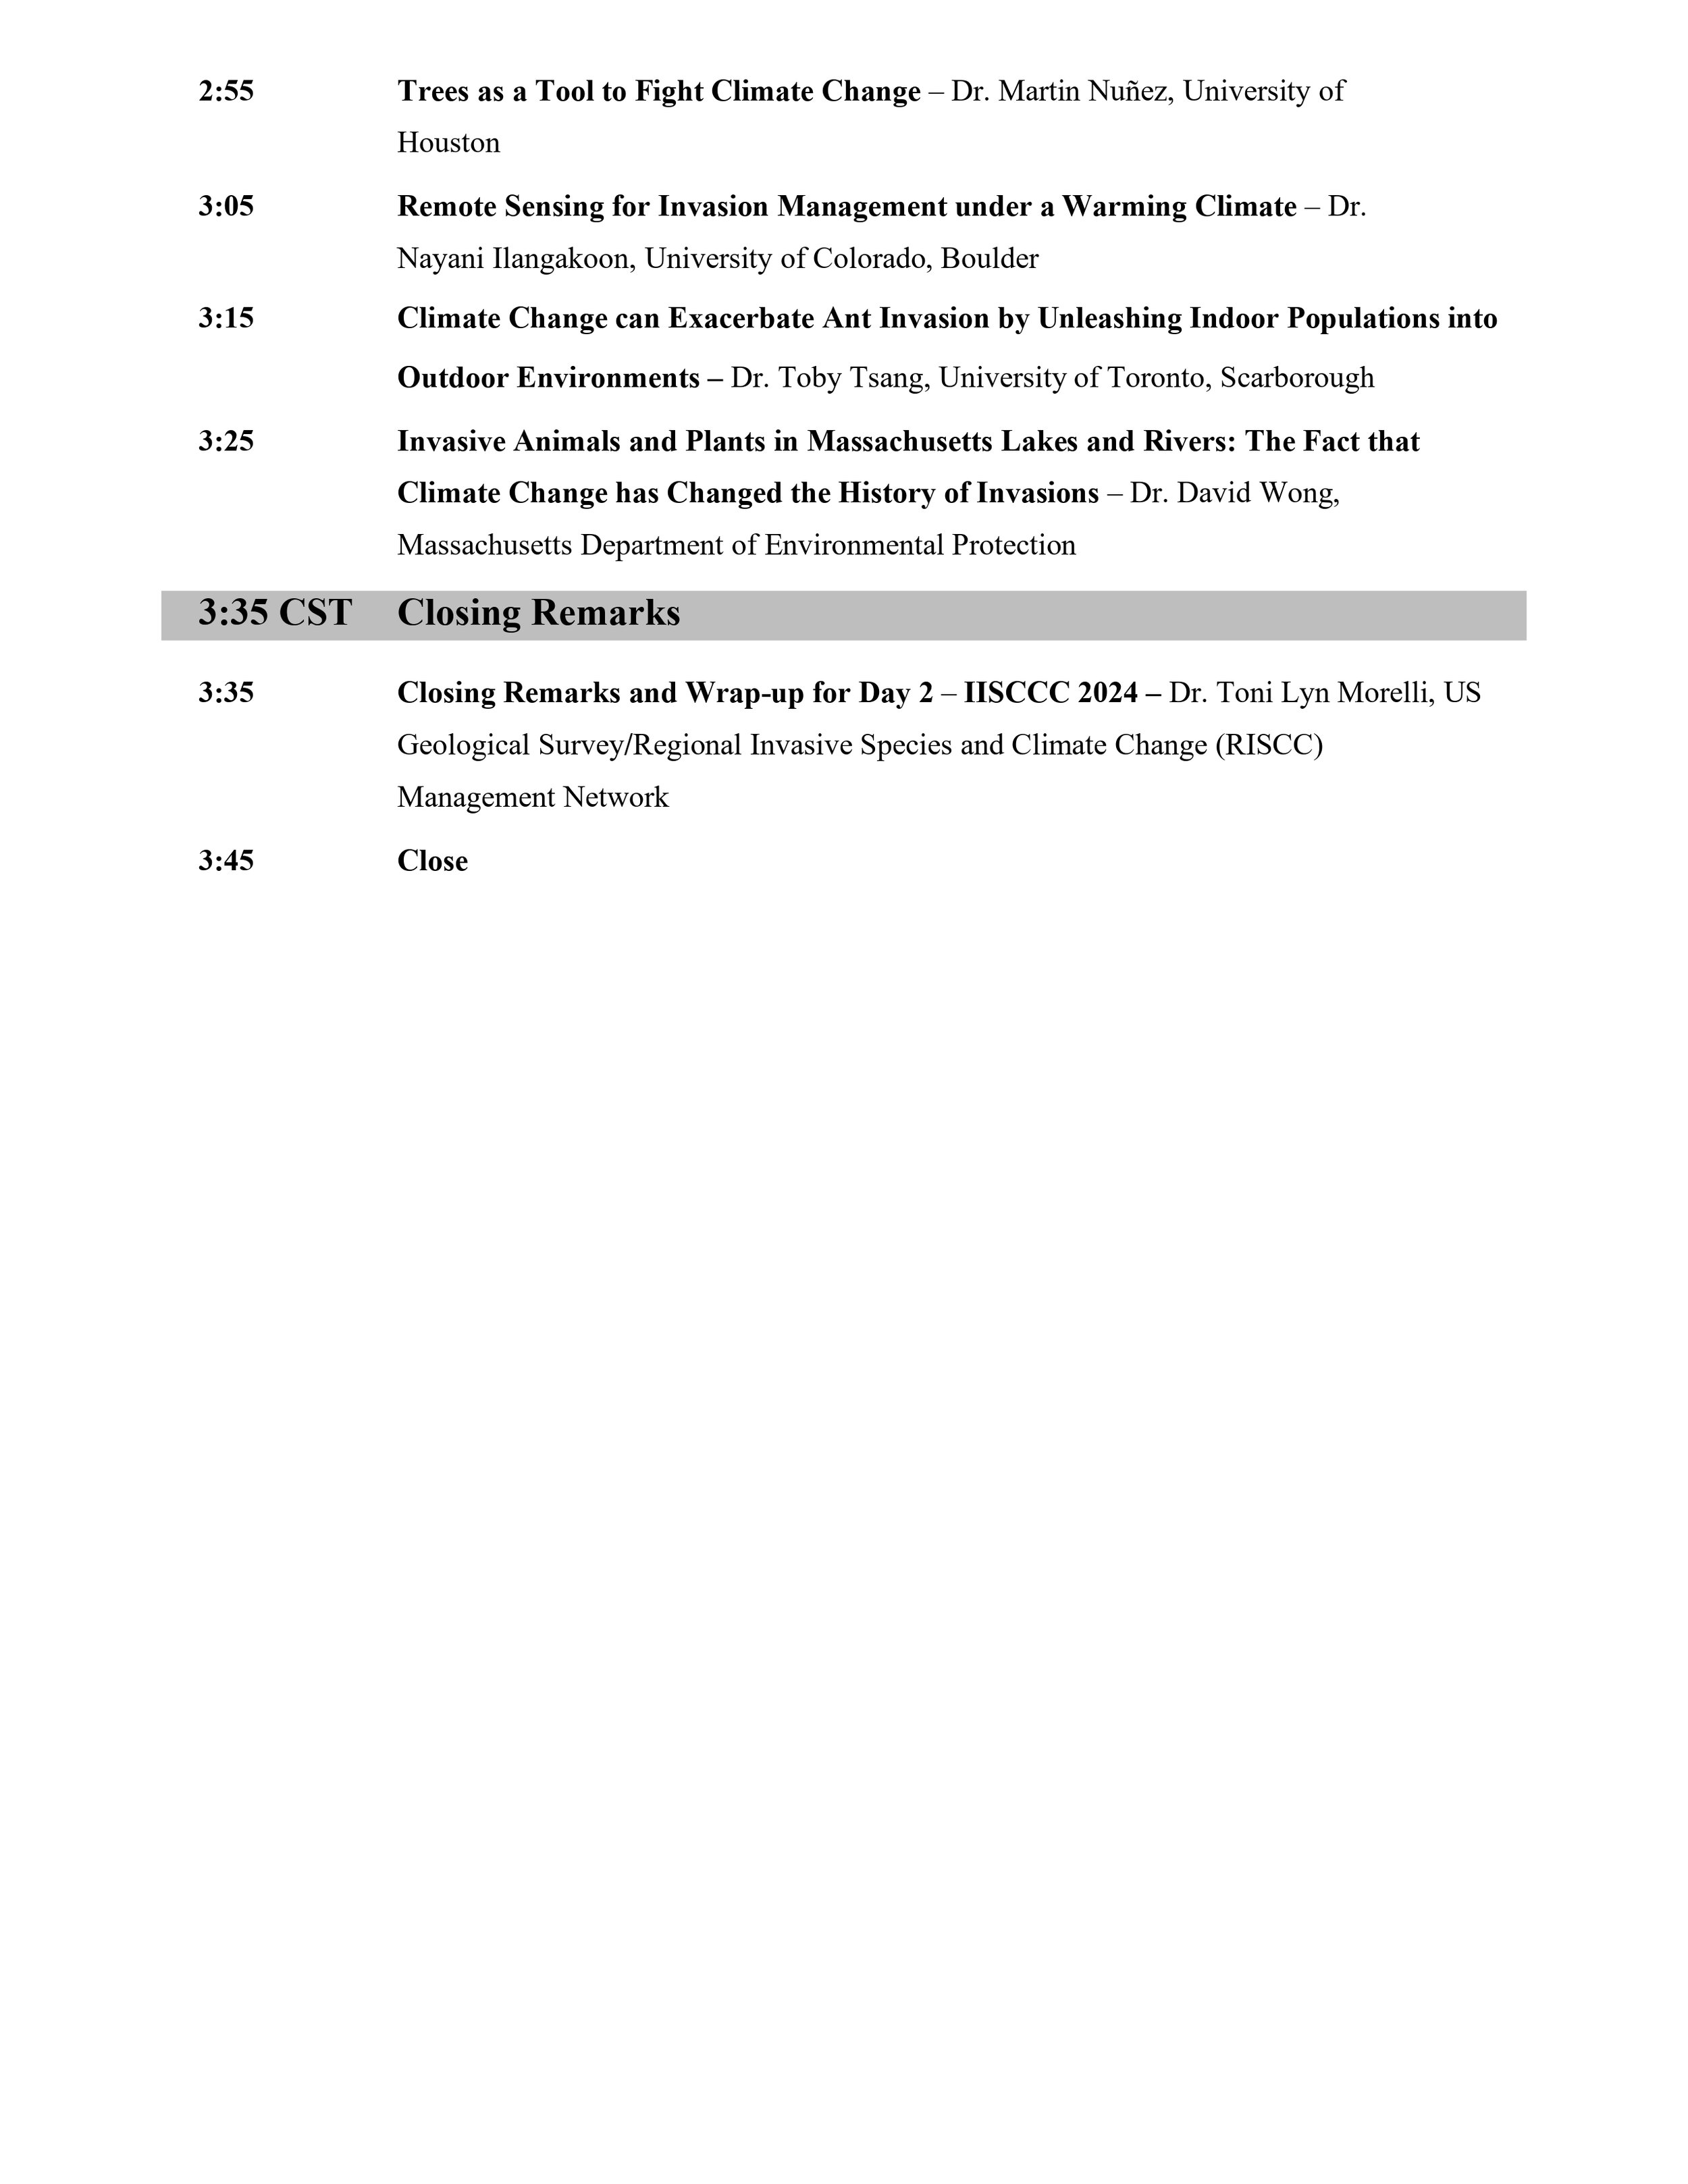 IISCCC-Detailed-Agenda-Final-Updated 2-16-24_page-0004.jpg